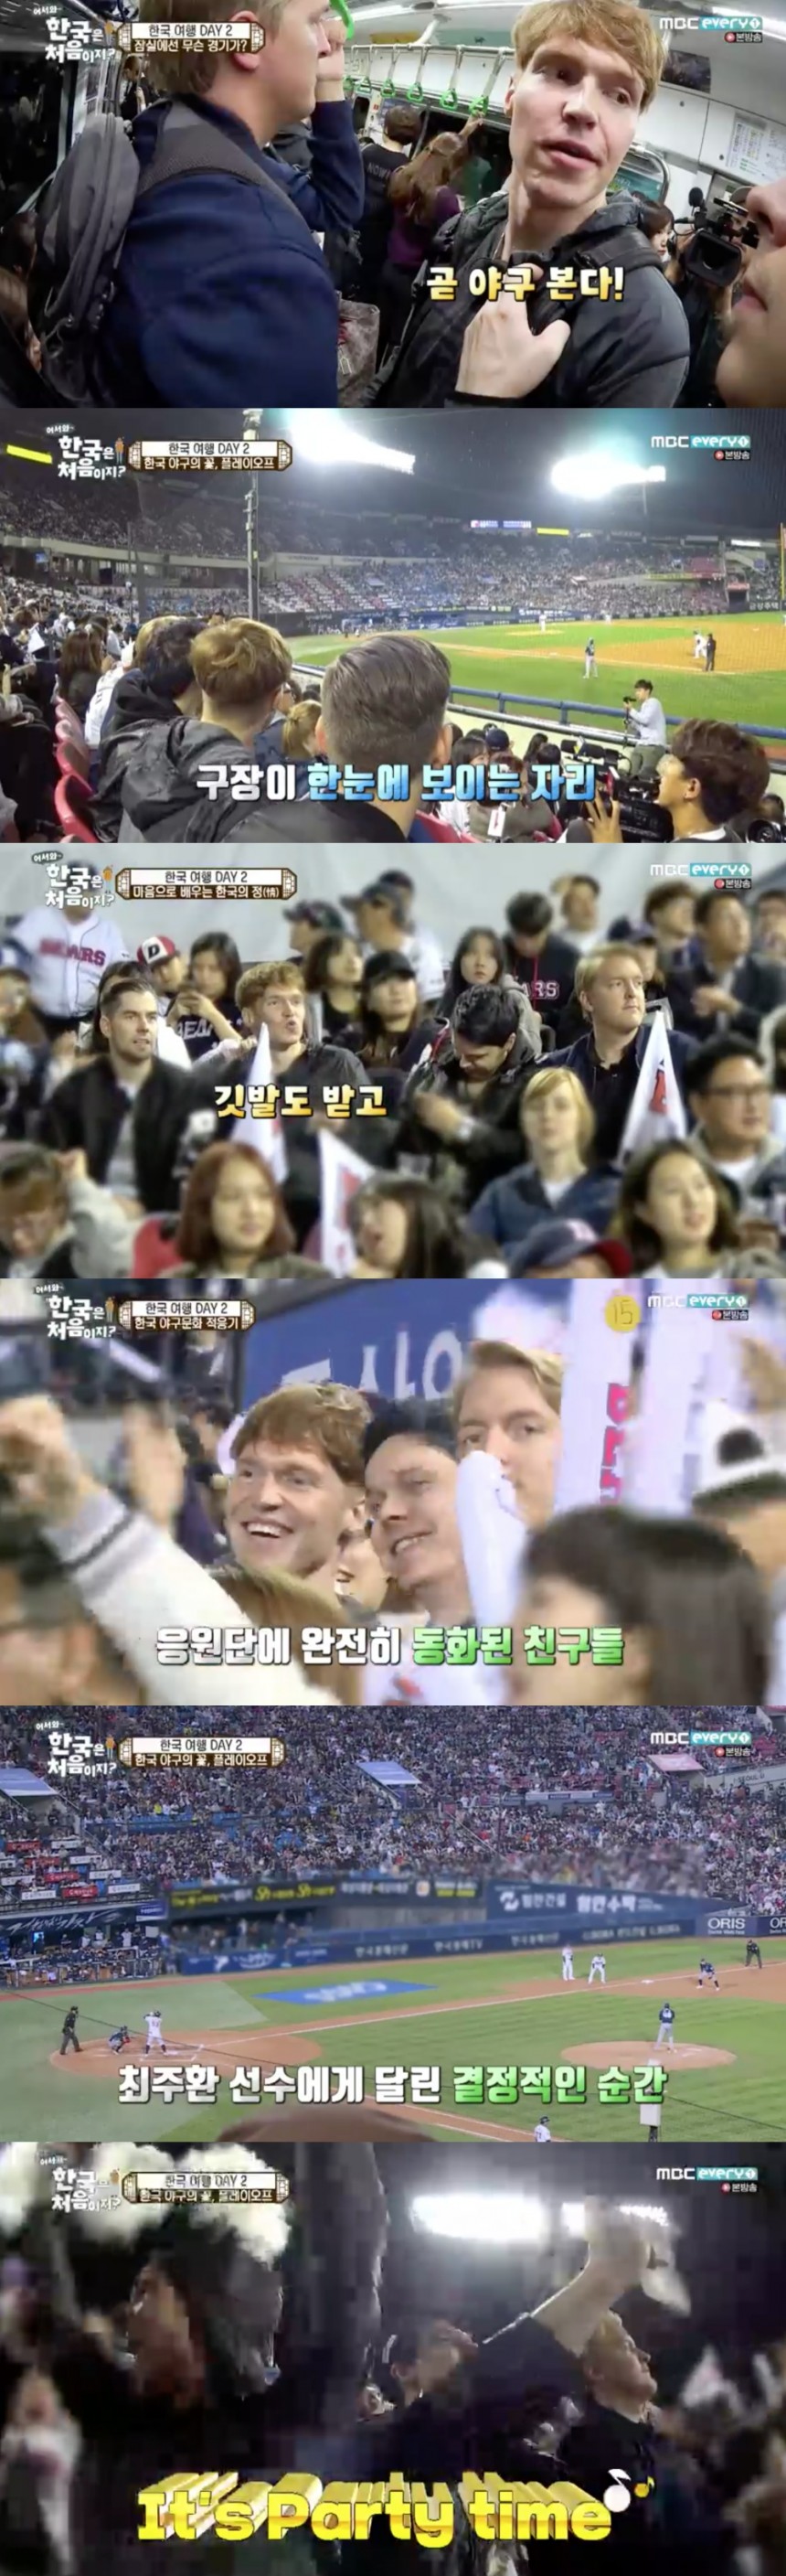 MBC every1 ‘어서와~ 한국은 처음이지?’ 방송 캡처 